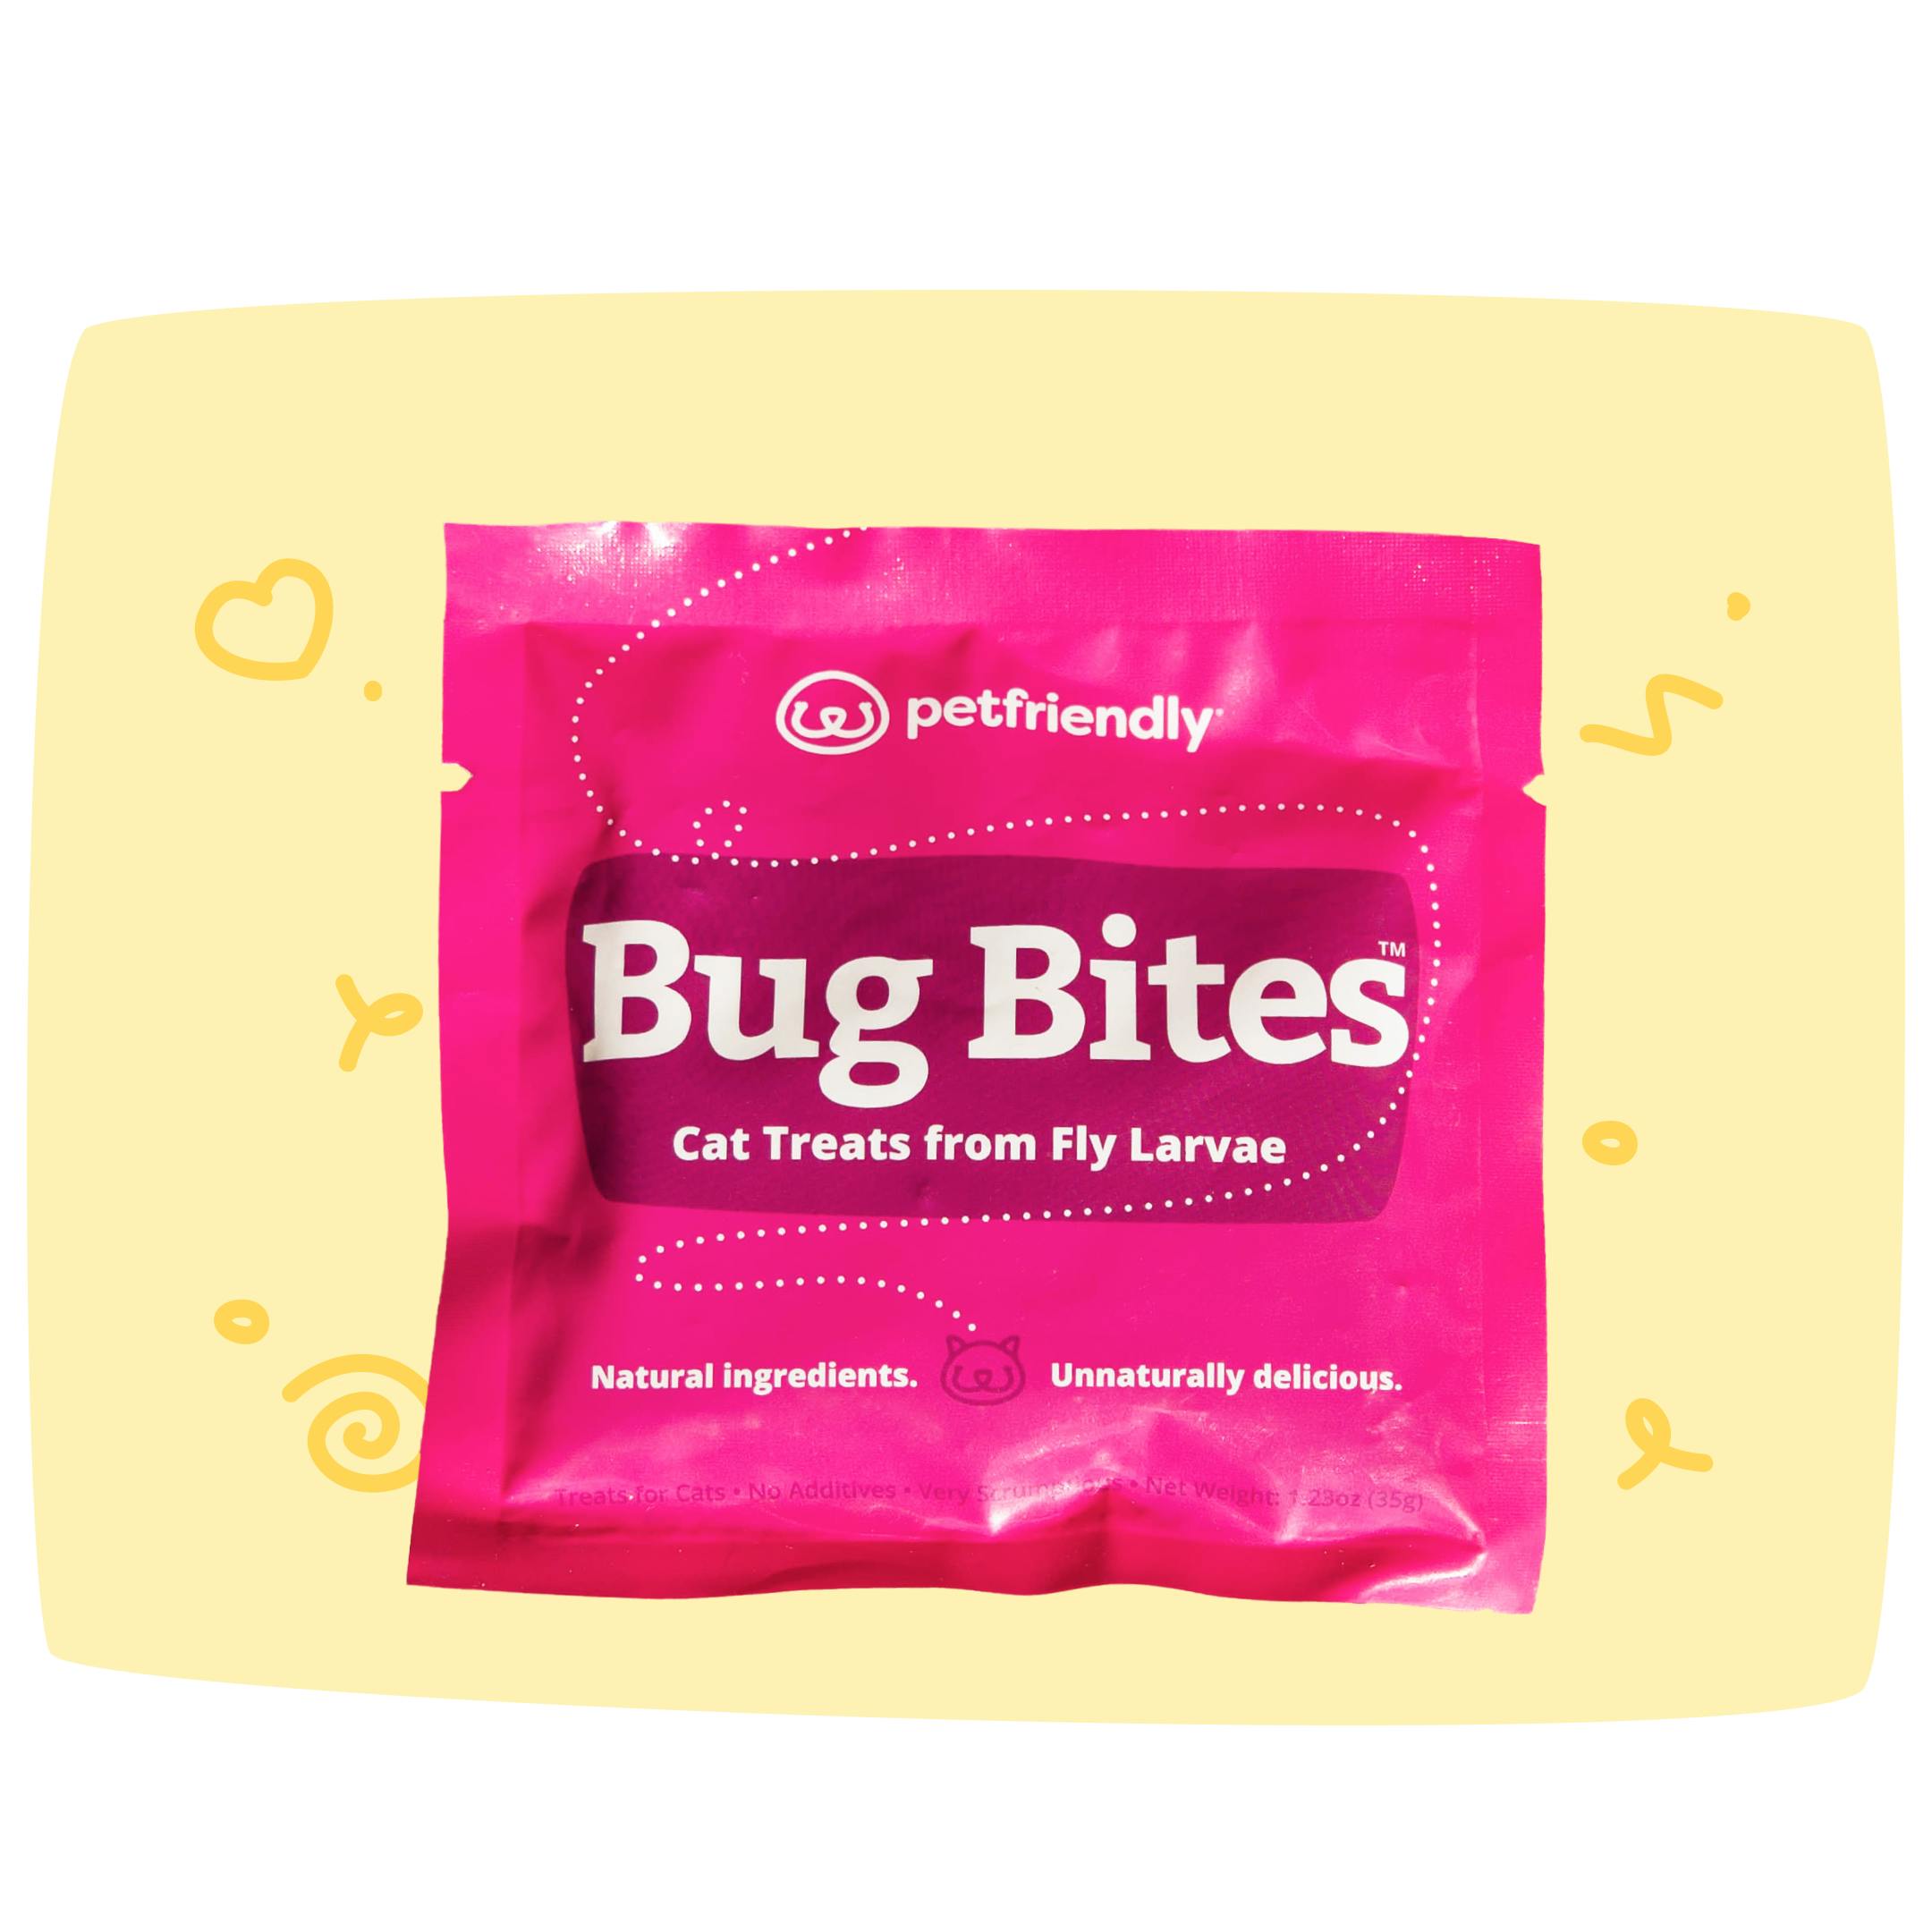 Bug Bites Full-size Bag